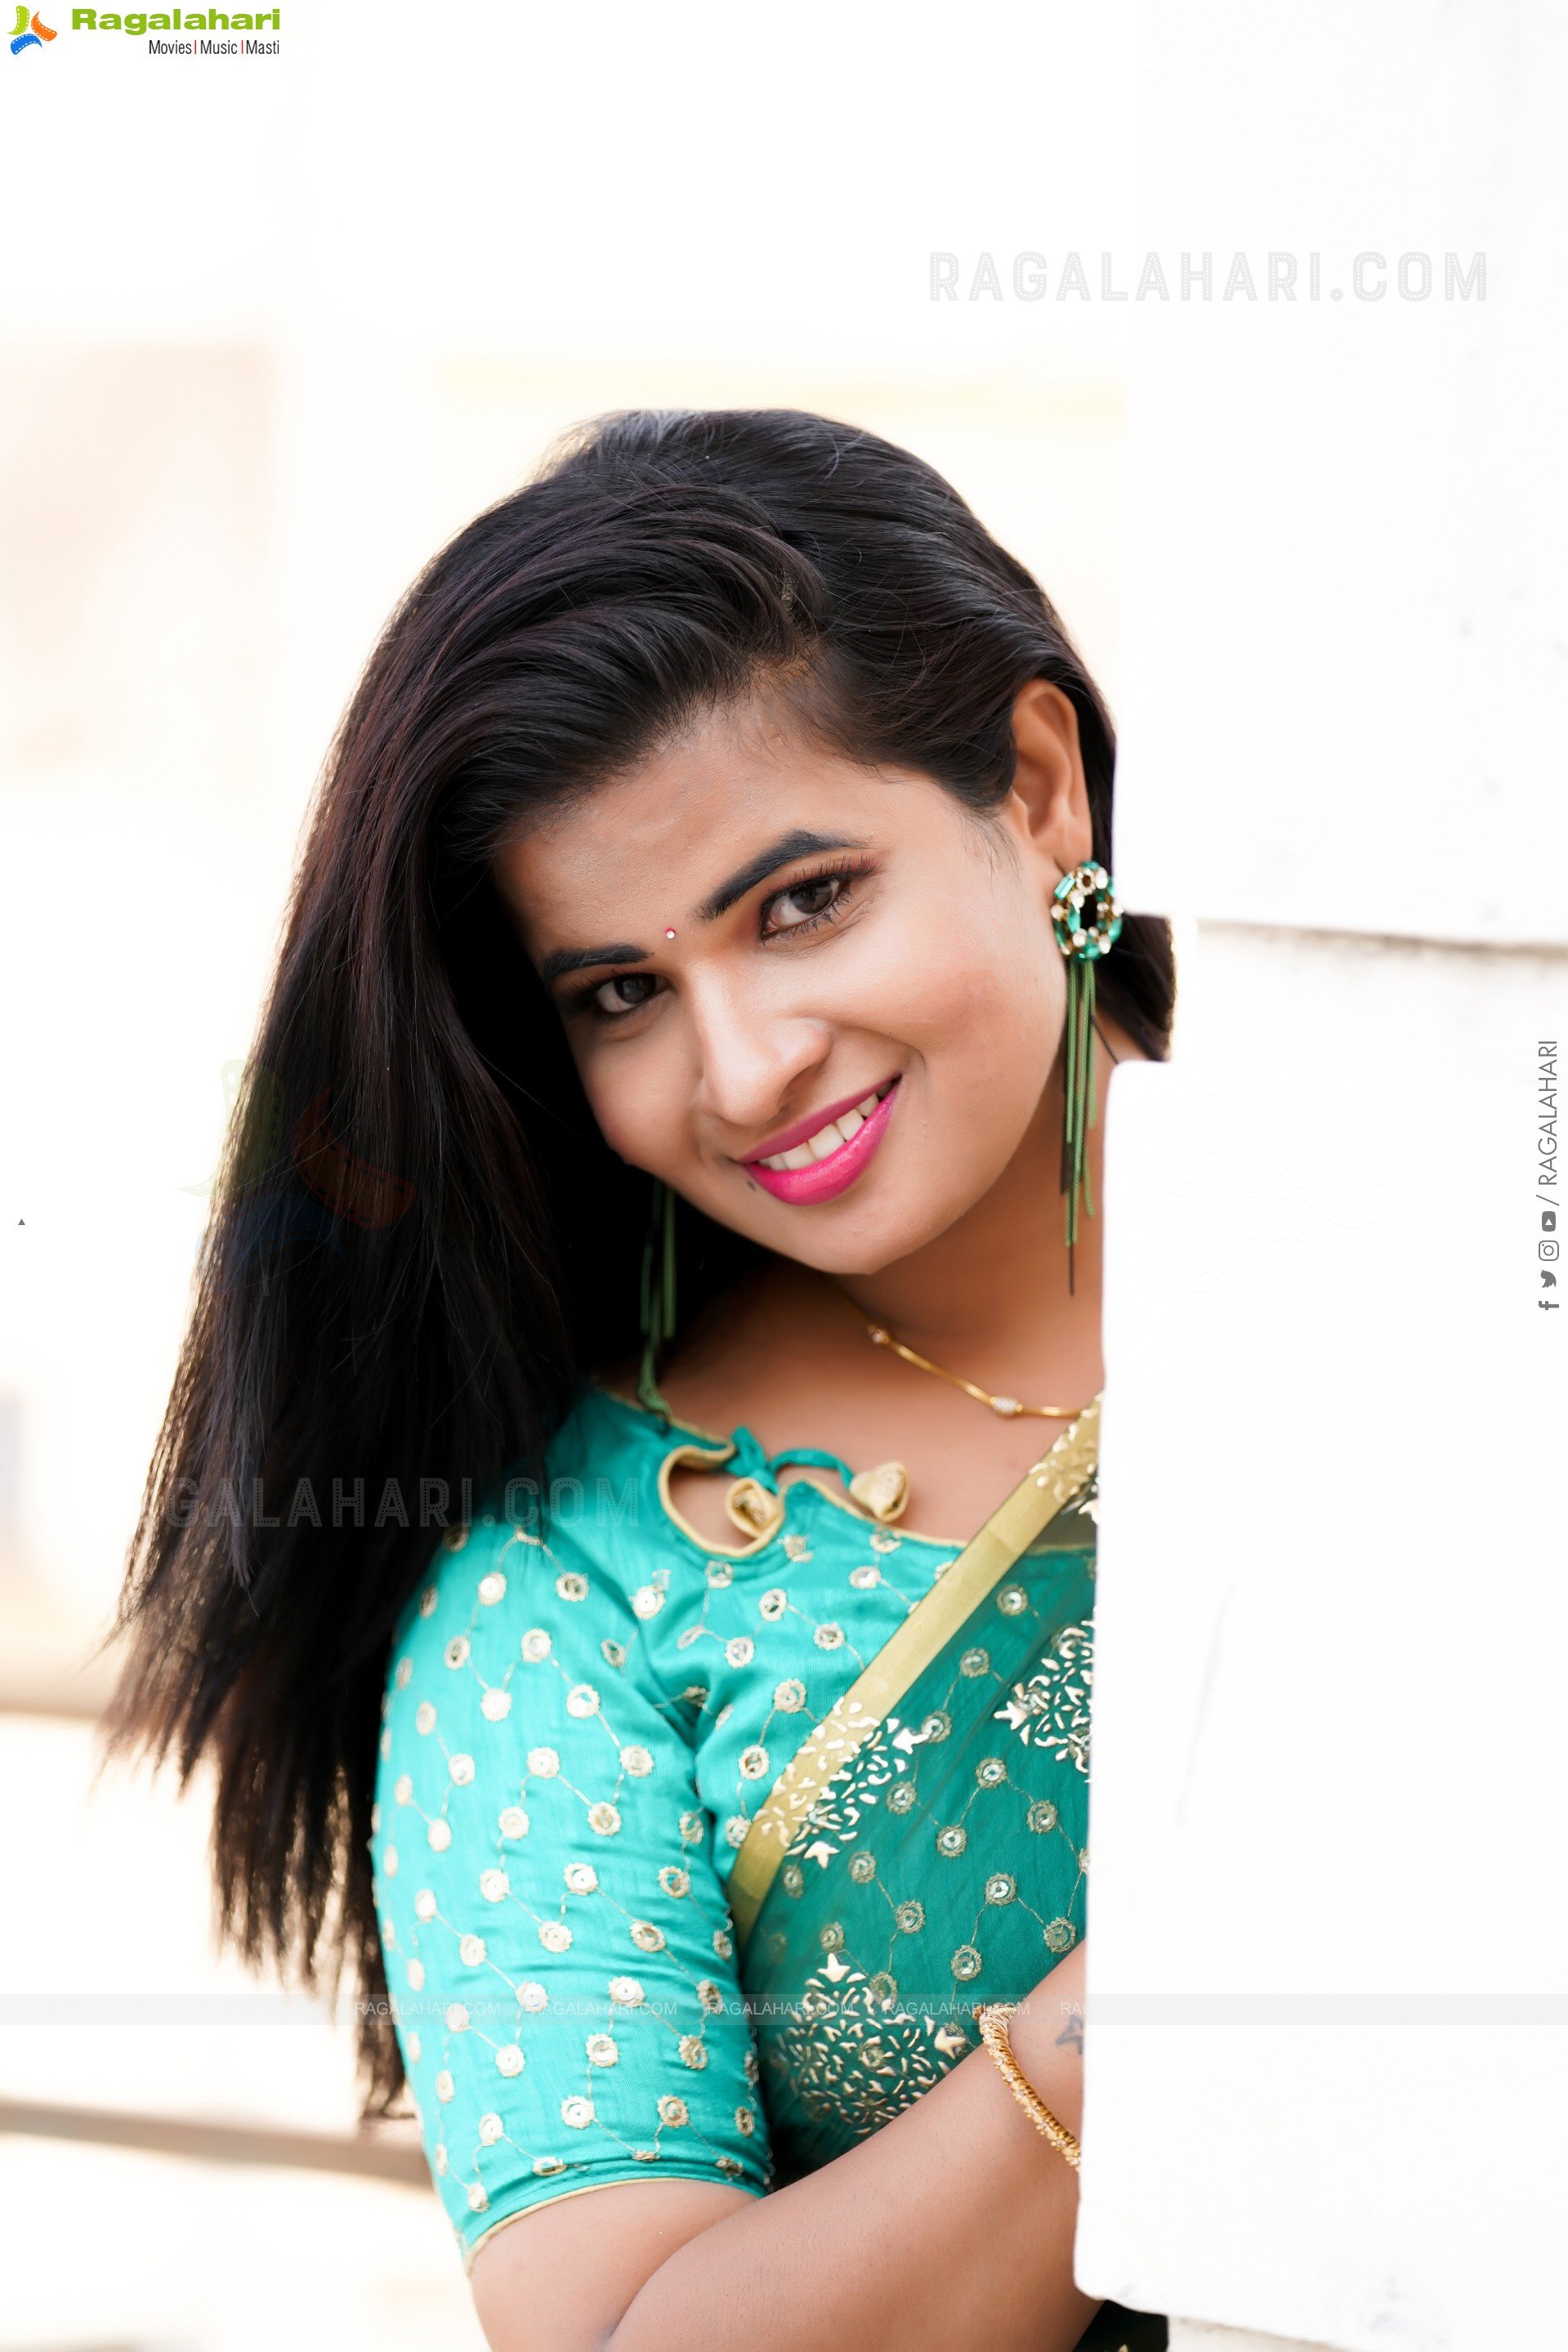 Anusha Venugopal in Beautiful Green Saree, Exclusive Photo Shoot